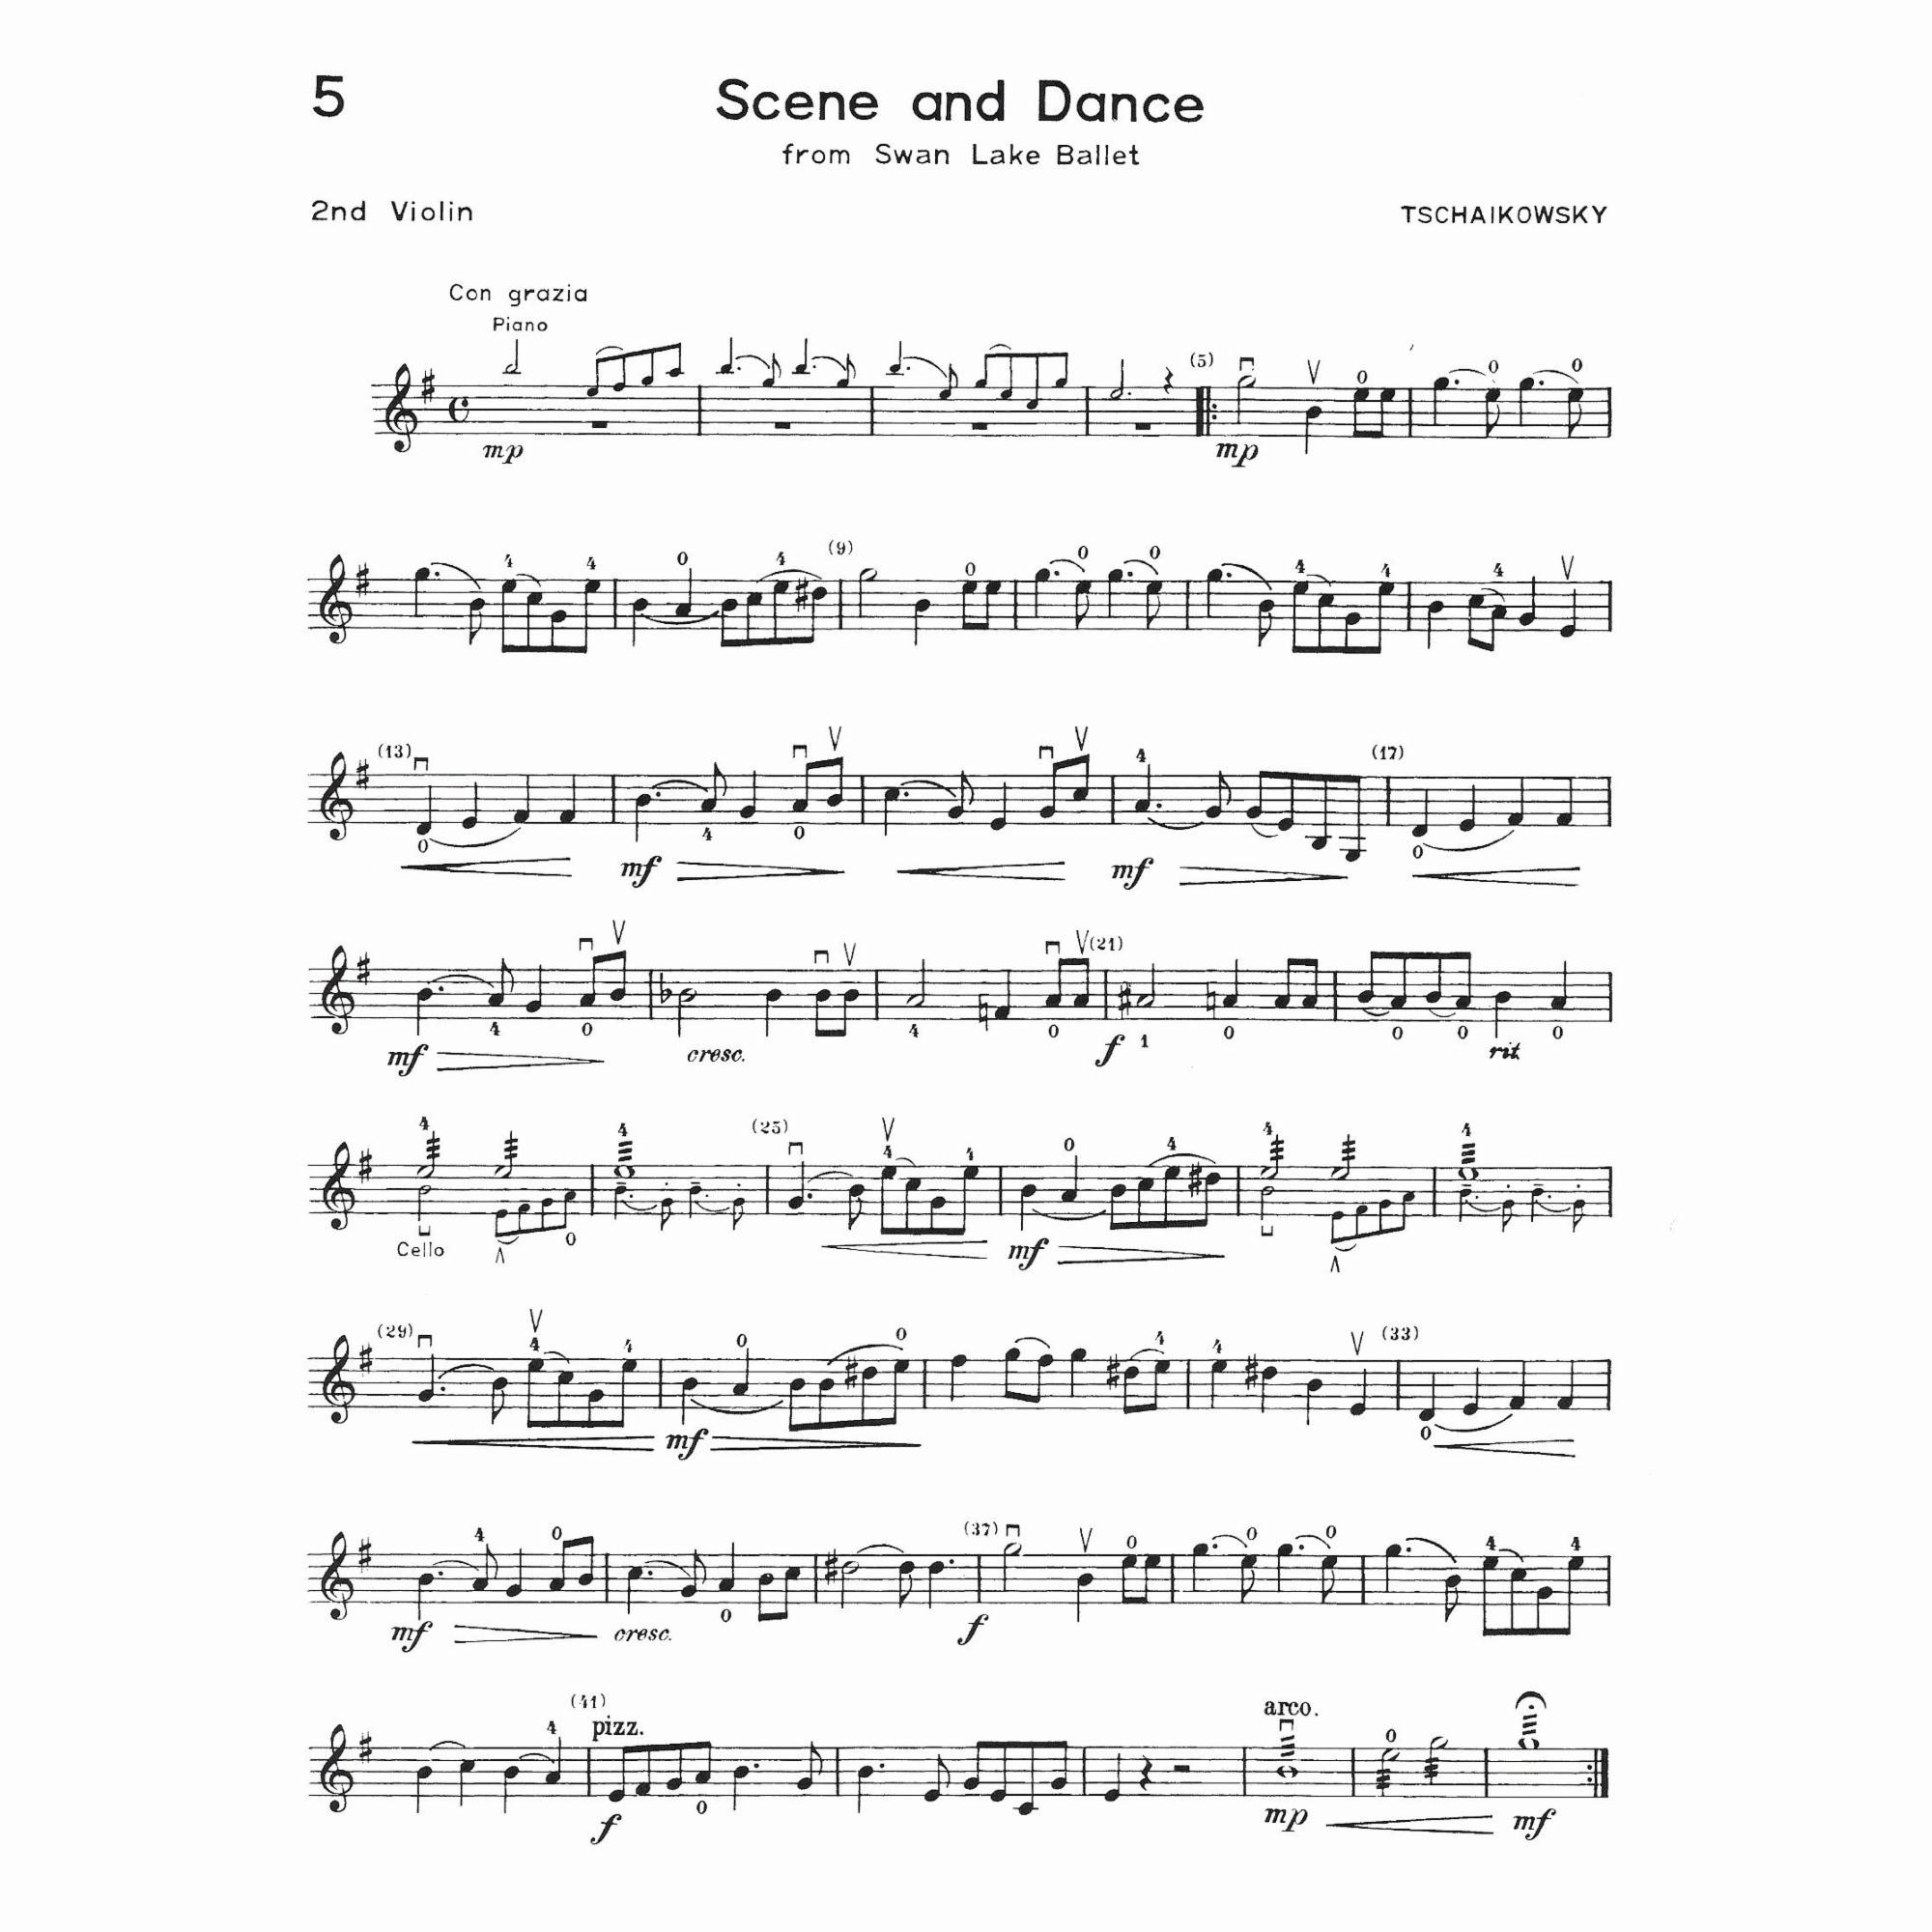 Sample: Second Violin (Pg. 5)